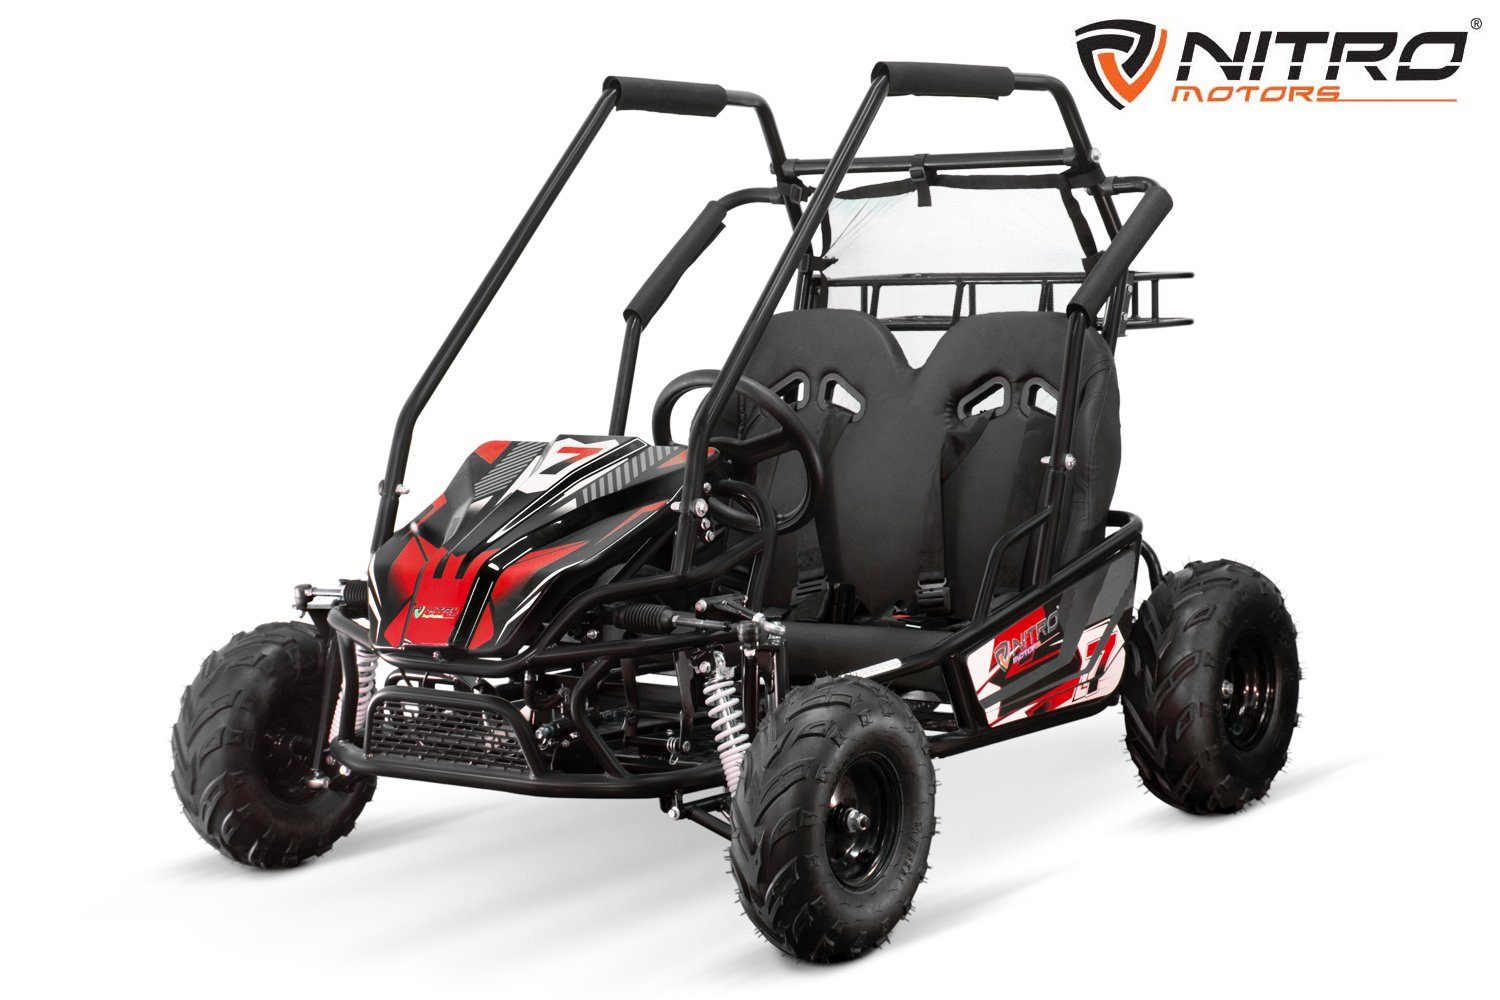 Nitro Motors Quad Gokart 212cc Automatik midi Kinder Buggy Forest PRM Quad ATV, 212,00 ccm